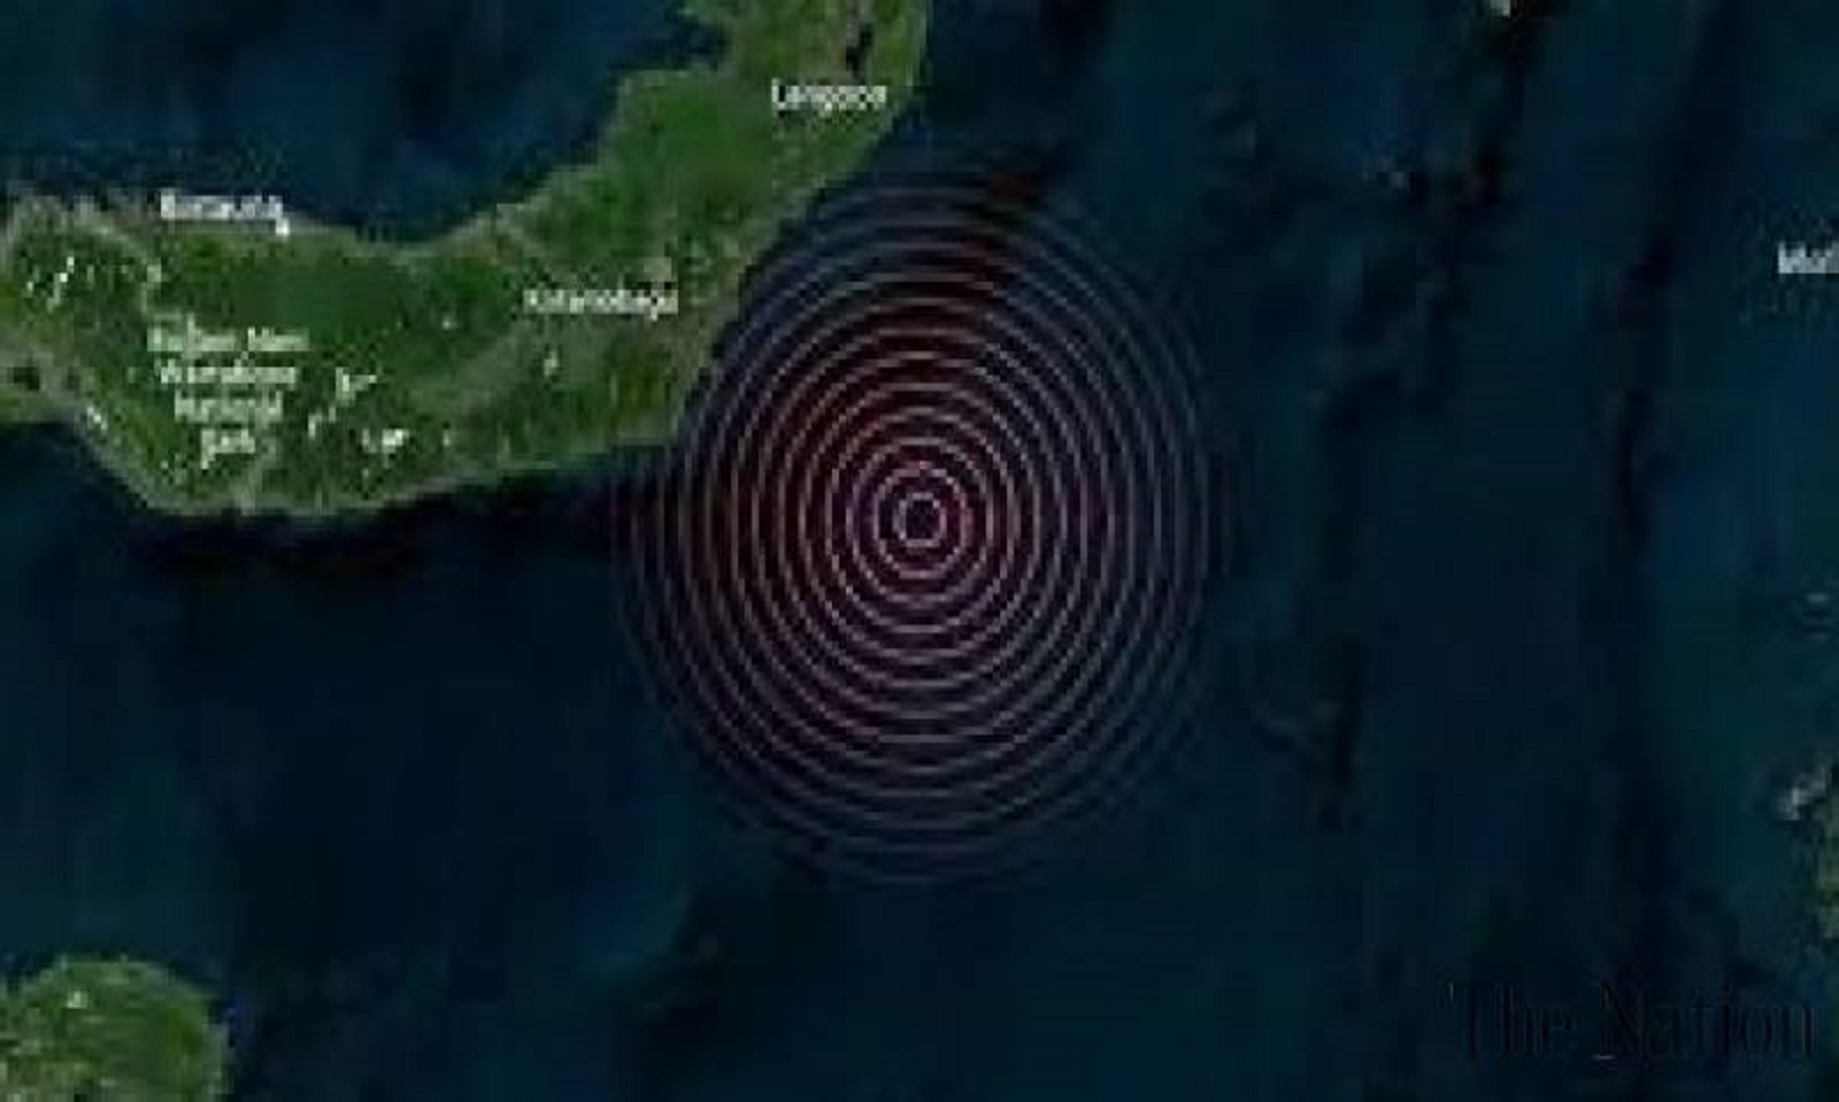 5.4-Magnitude Quake Hits 166 Km SSE Of Tondano, Indonesia -USGS